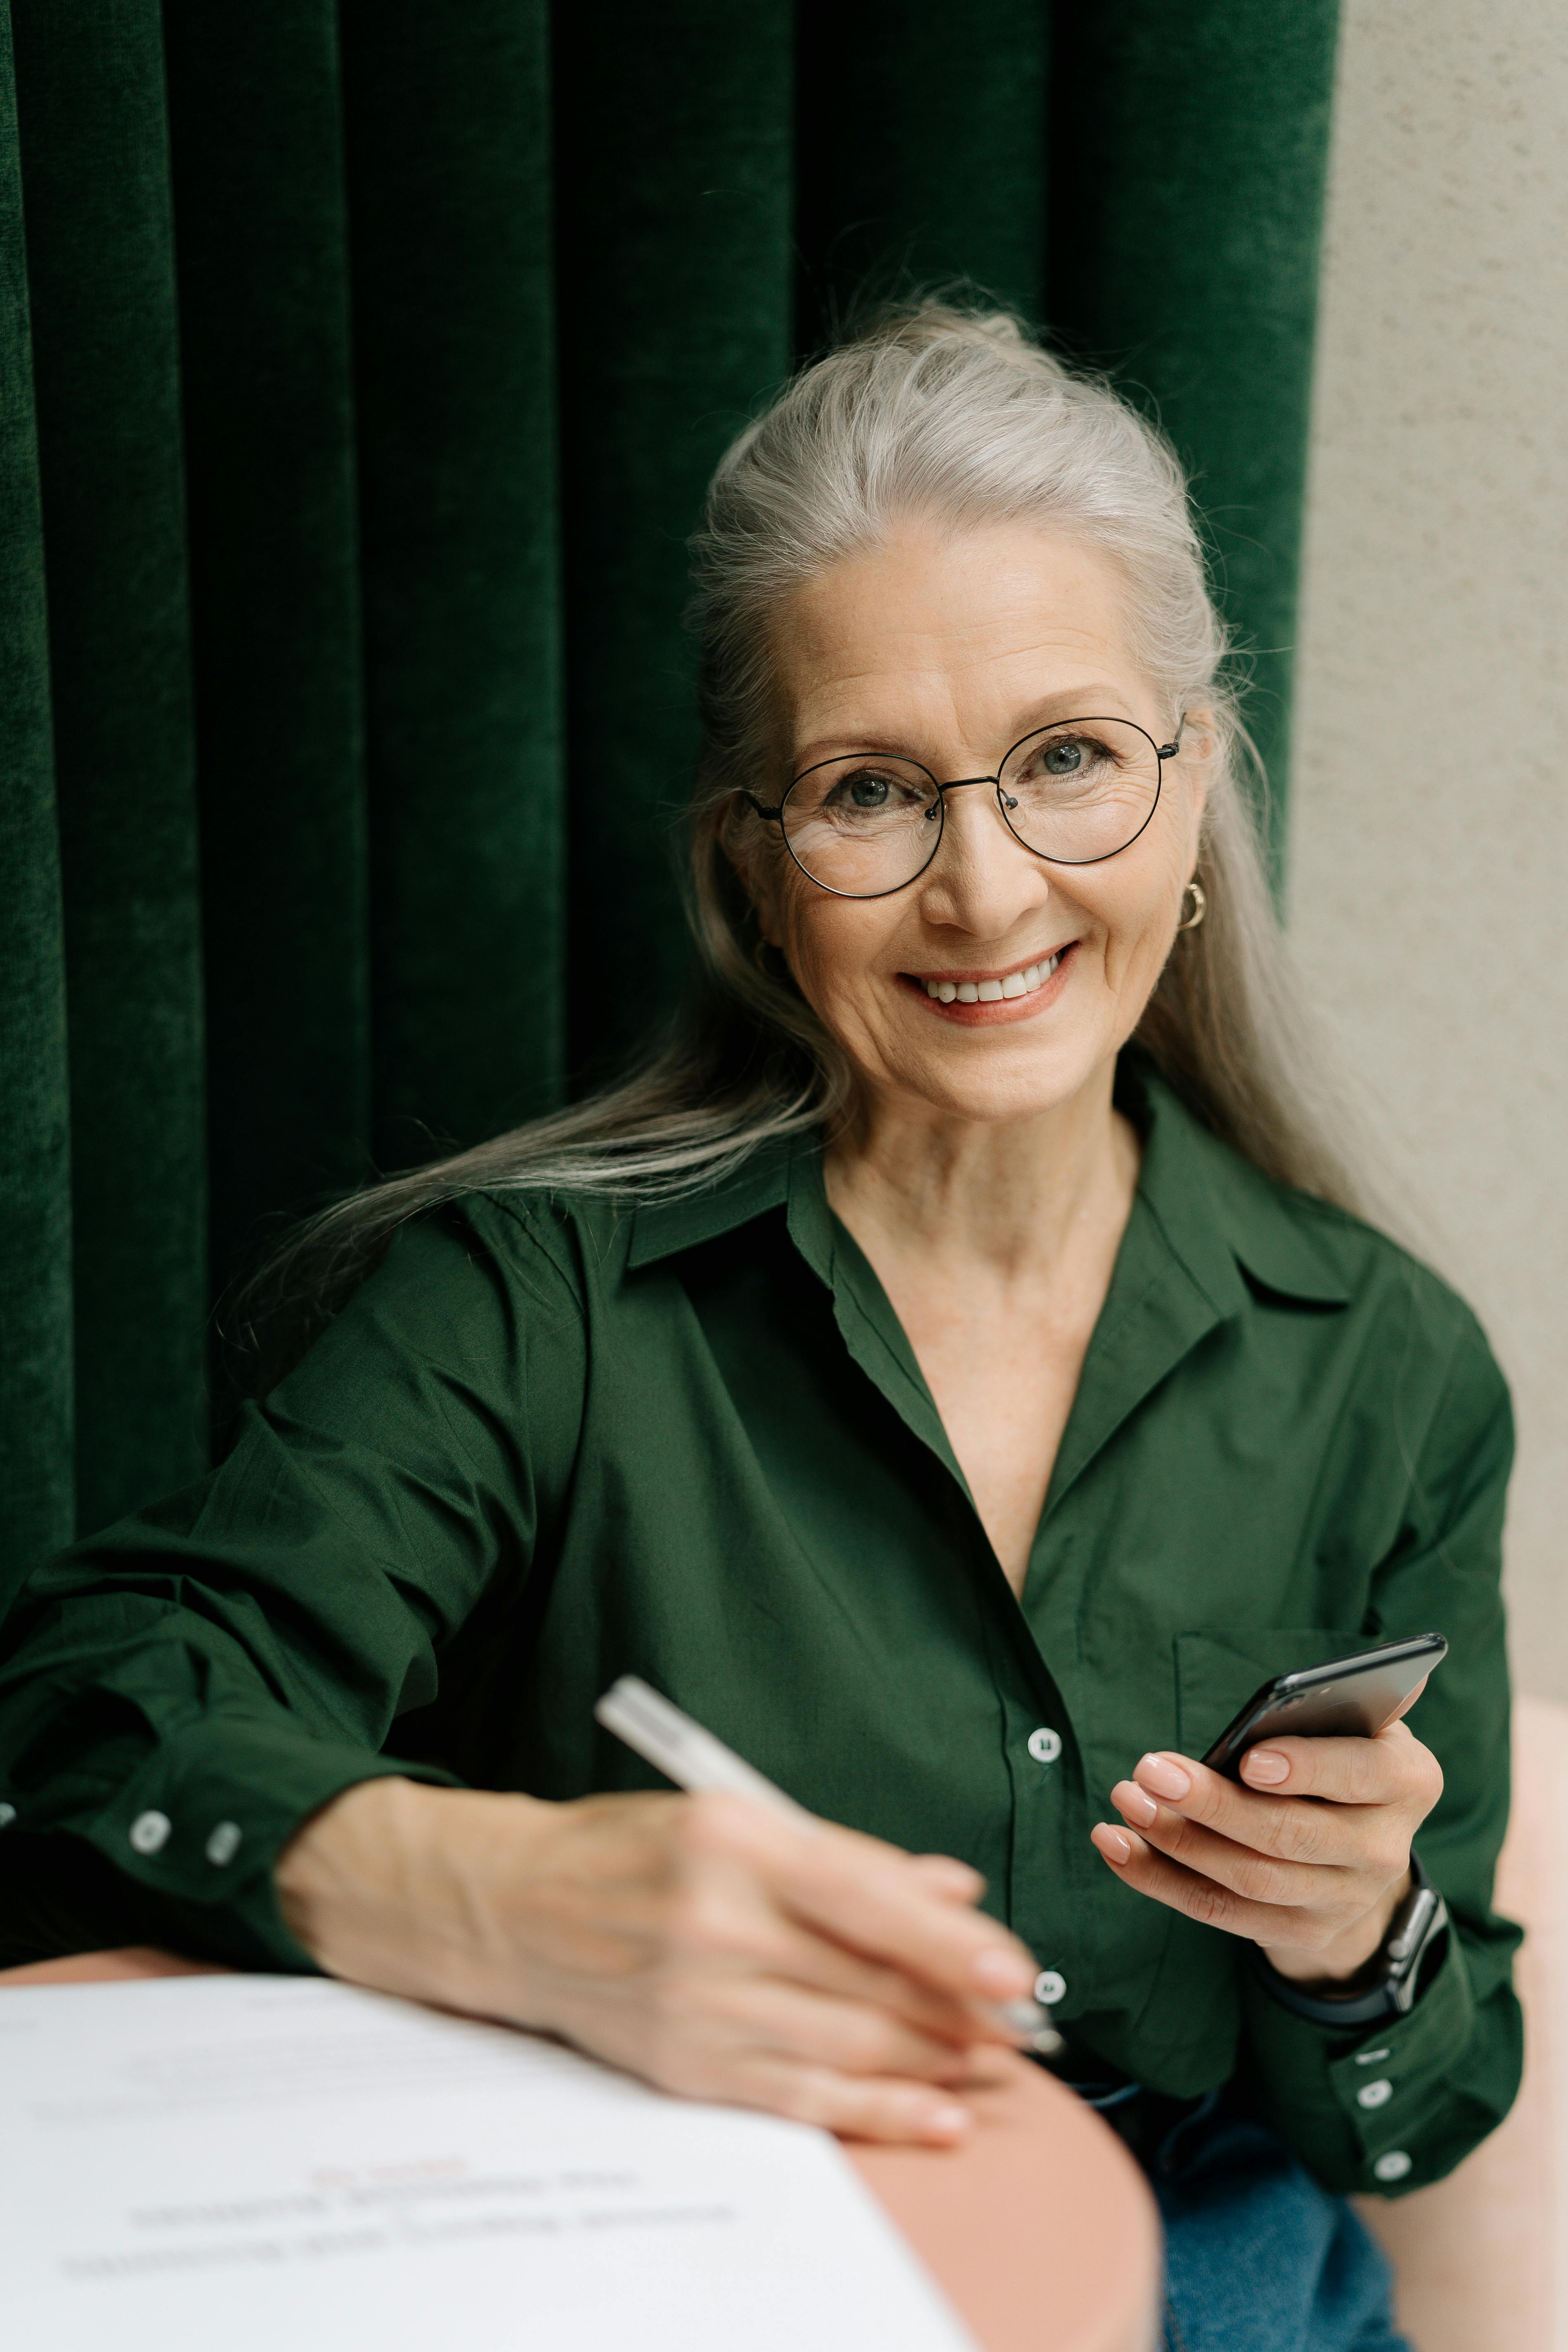 A senior woman smiling | Source: Pexels